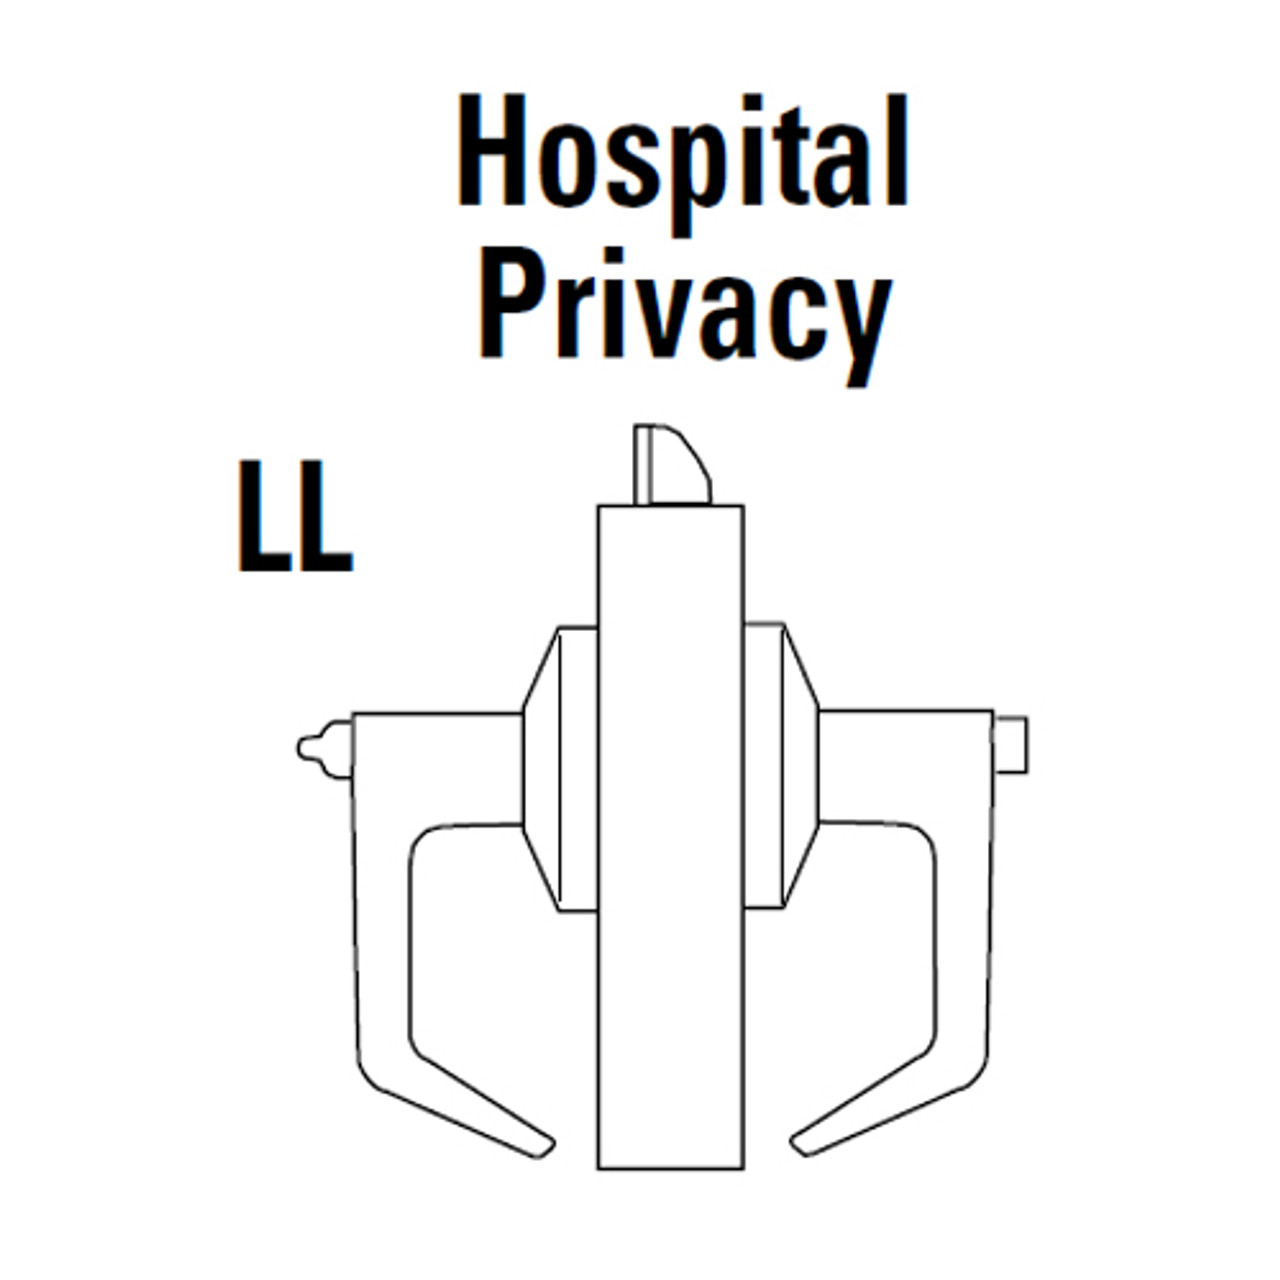 9K30LL14CSTK606 Best 9K Series Hospital Privacy Heavy Duty Cylindrical Lever Locks in Satin Brass